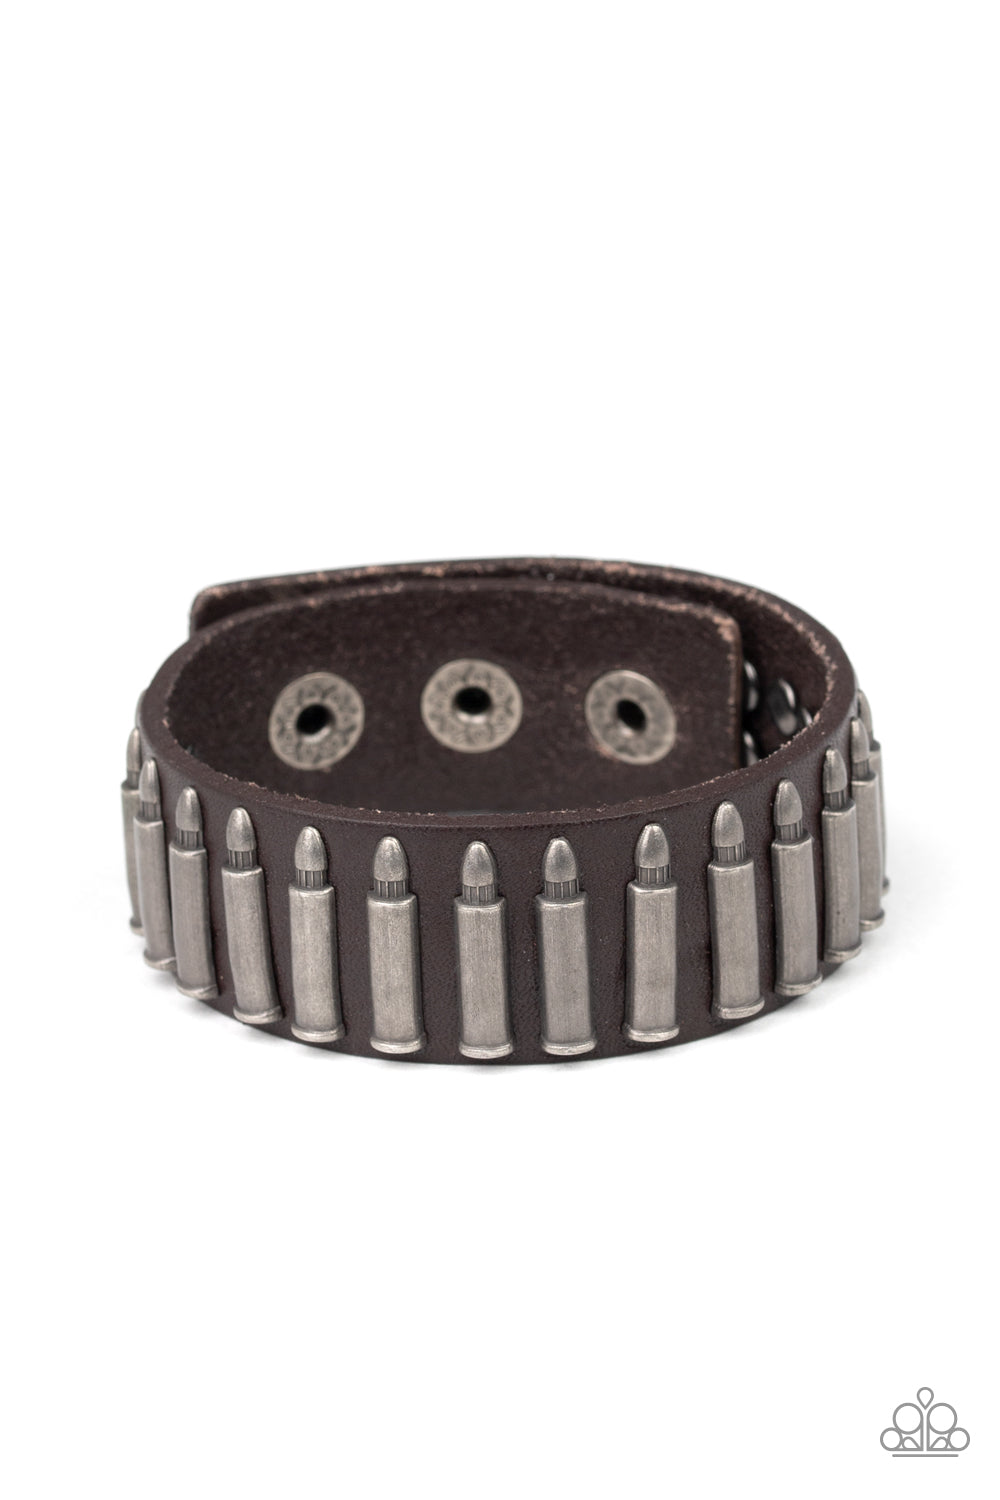 Armed and Dangerous Brown-Urban Bracelet